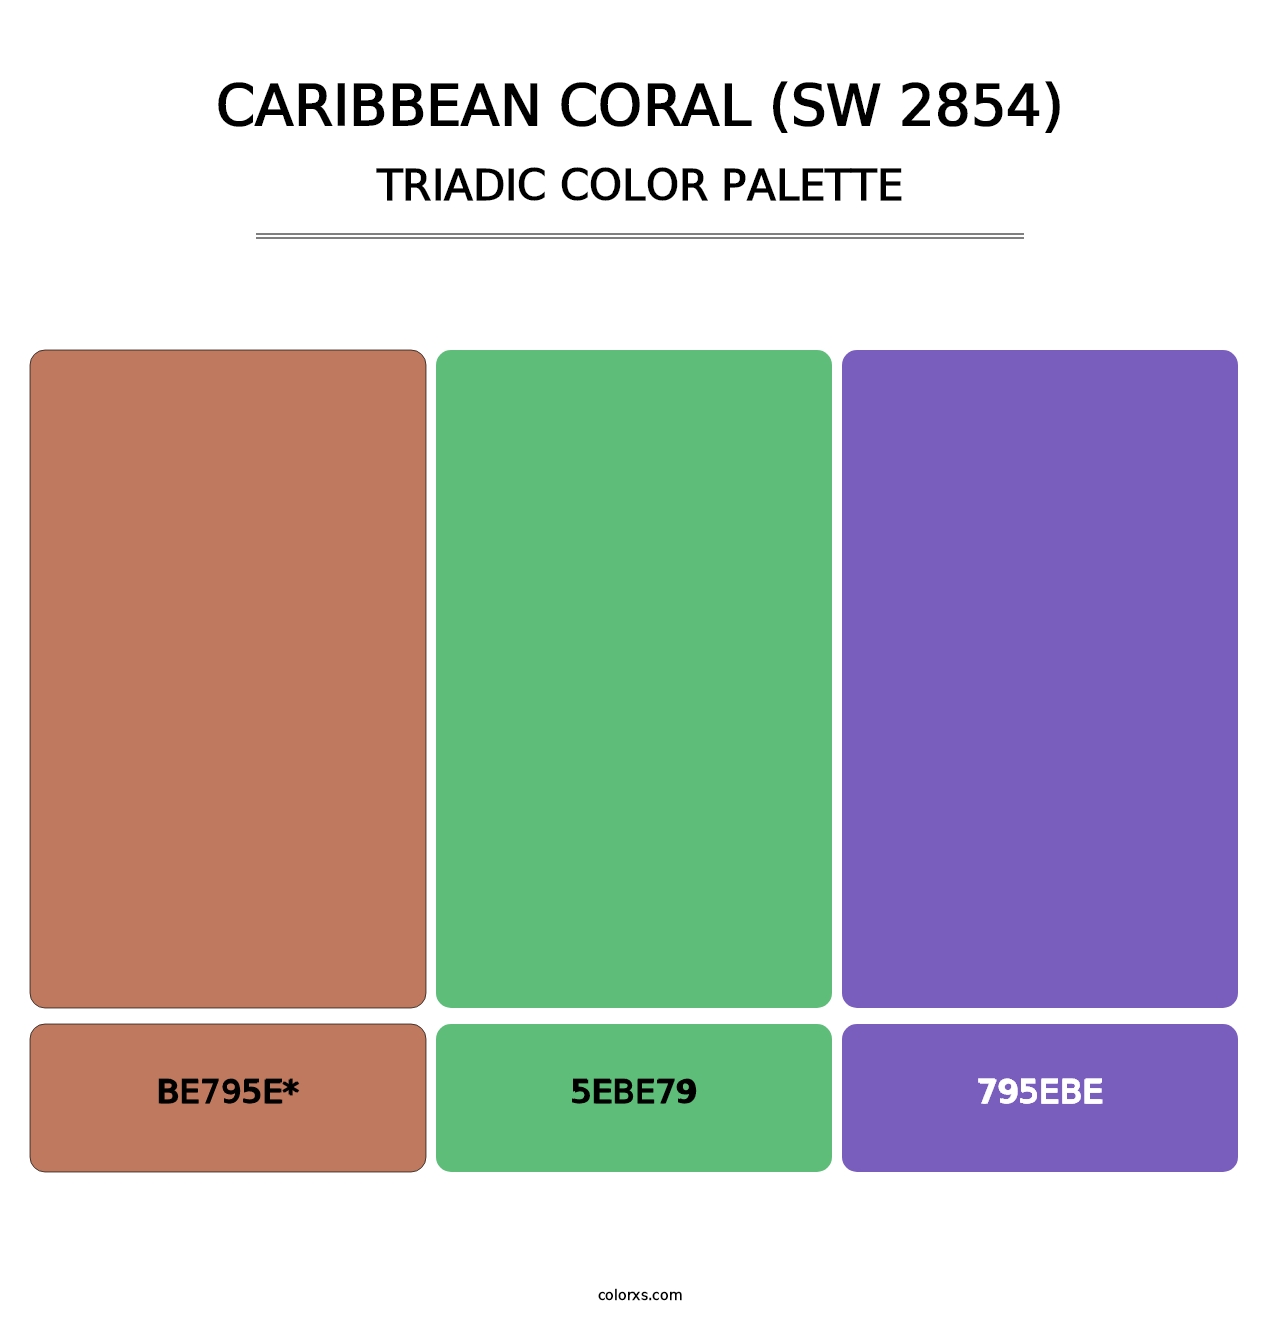 Caribbean Coral (SW 2854) - Triadic Color Palette